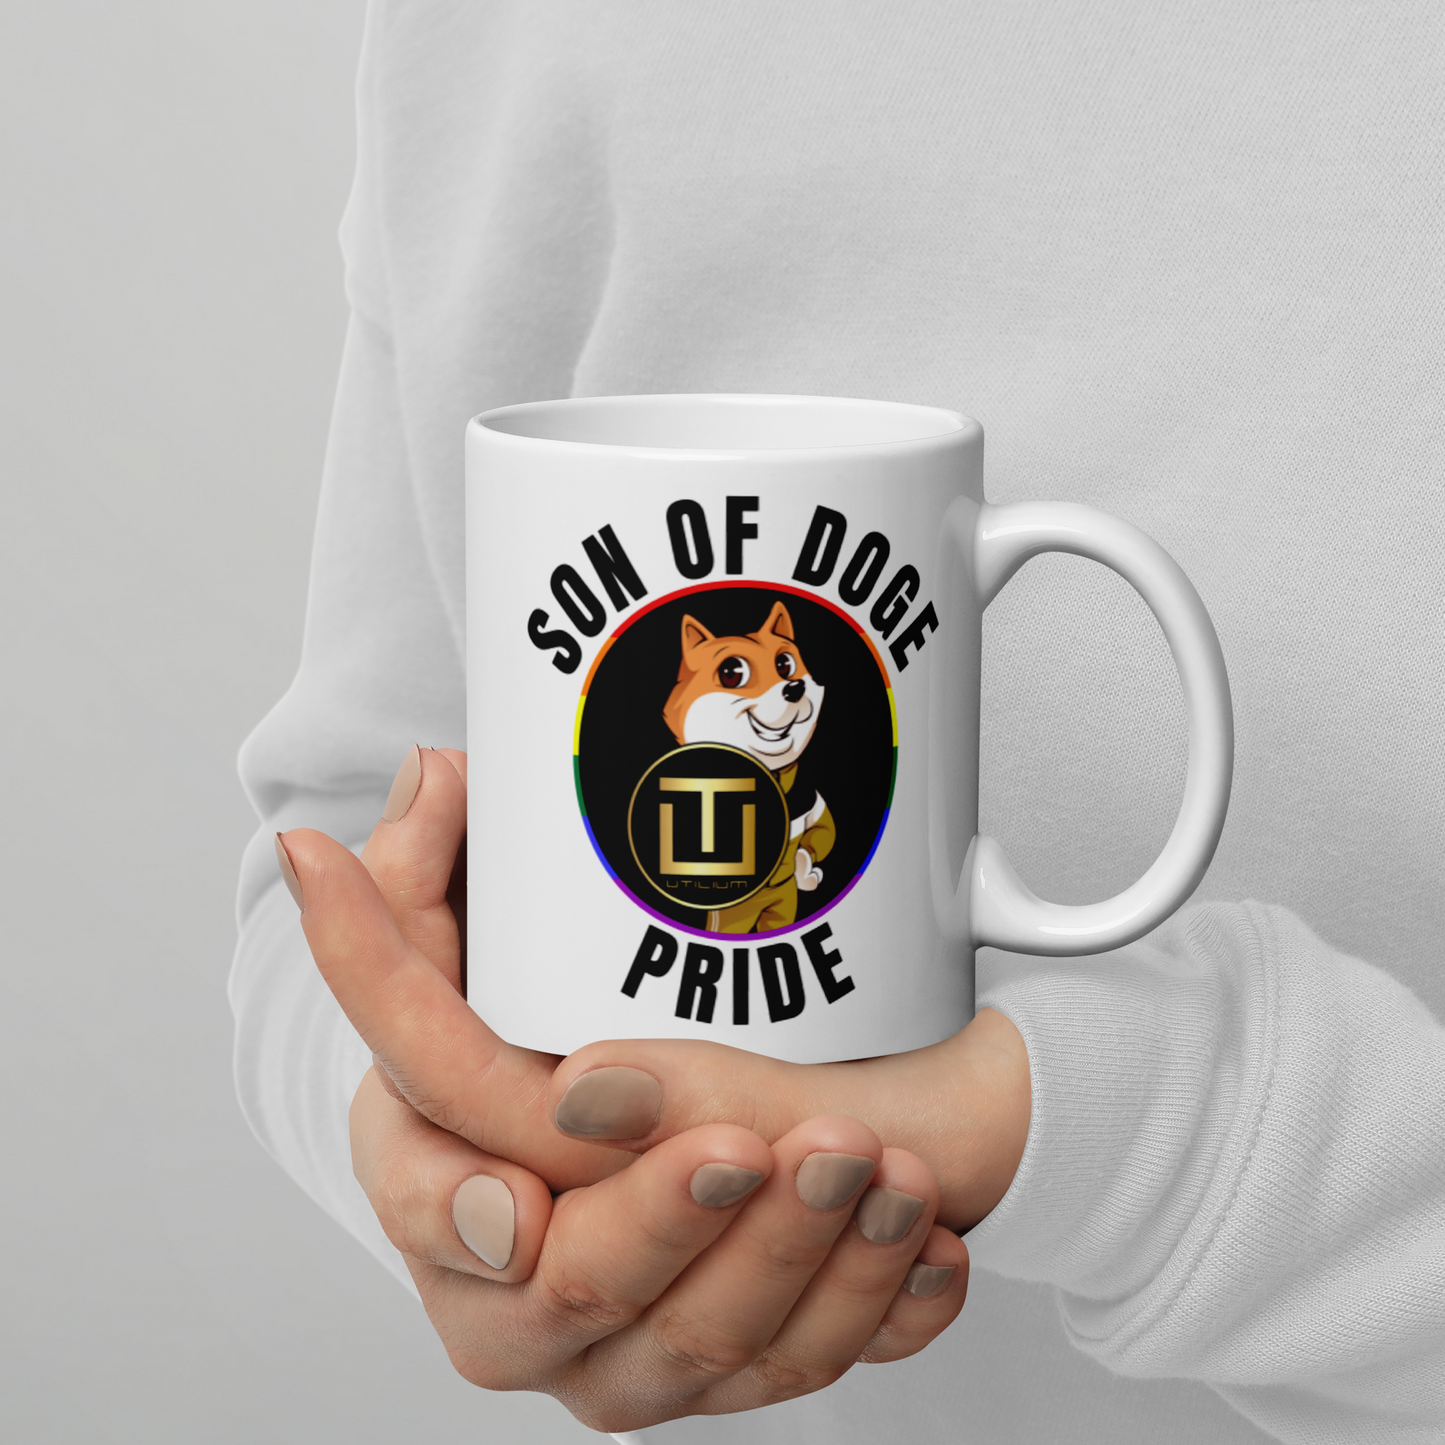 Son Of Doge 'Pride' White glossy mug